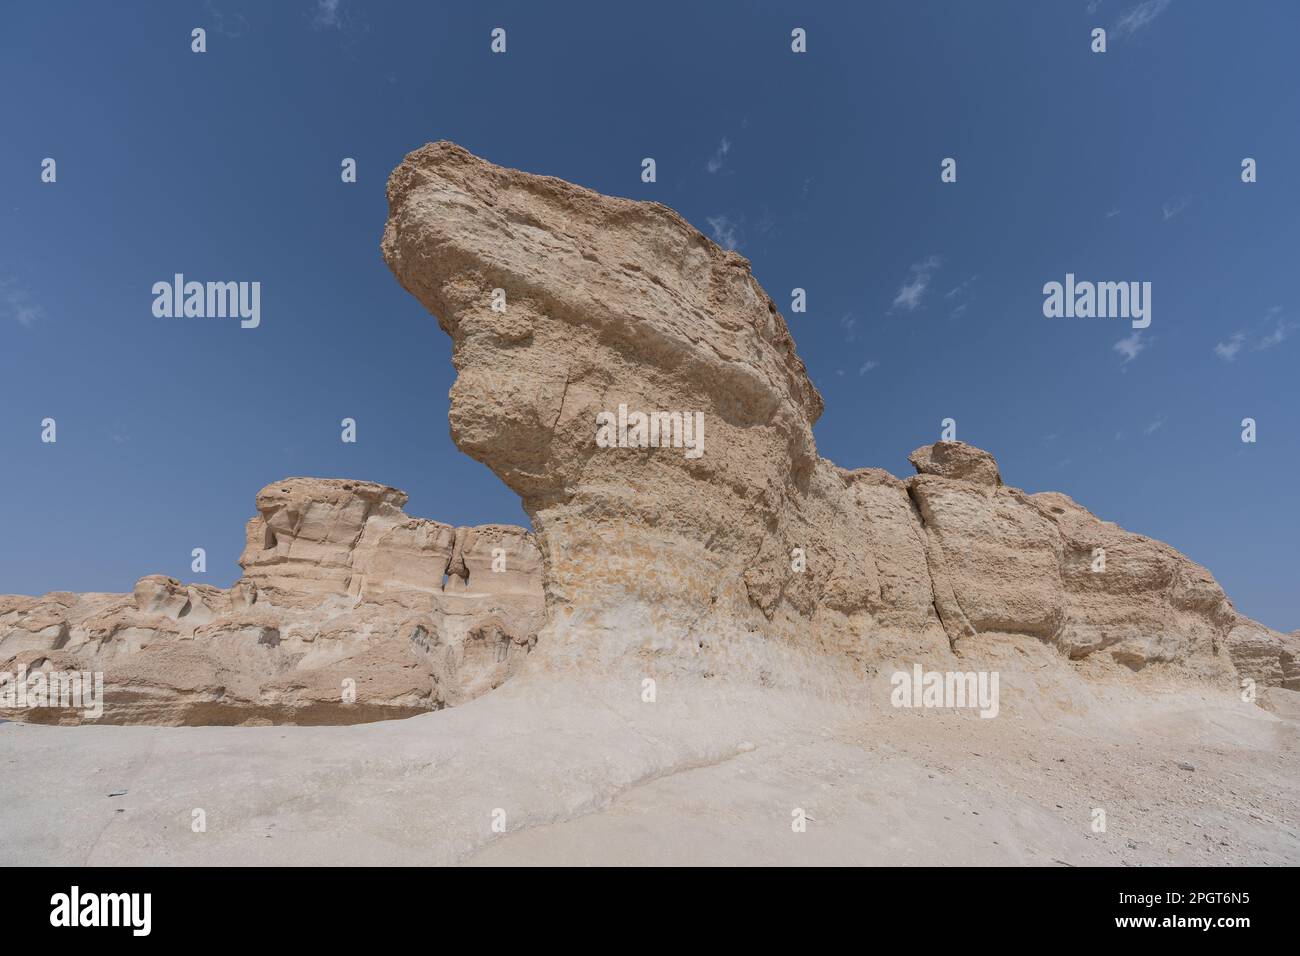 Mount Abu Hsas Altoithir, Al Hofuf Saudi Arabia Stock Photo